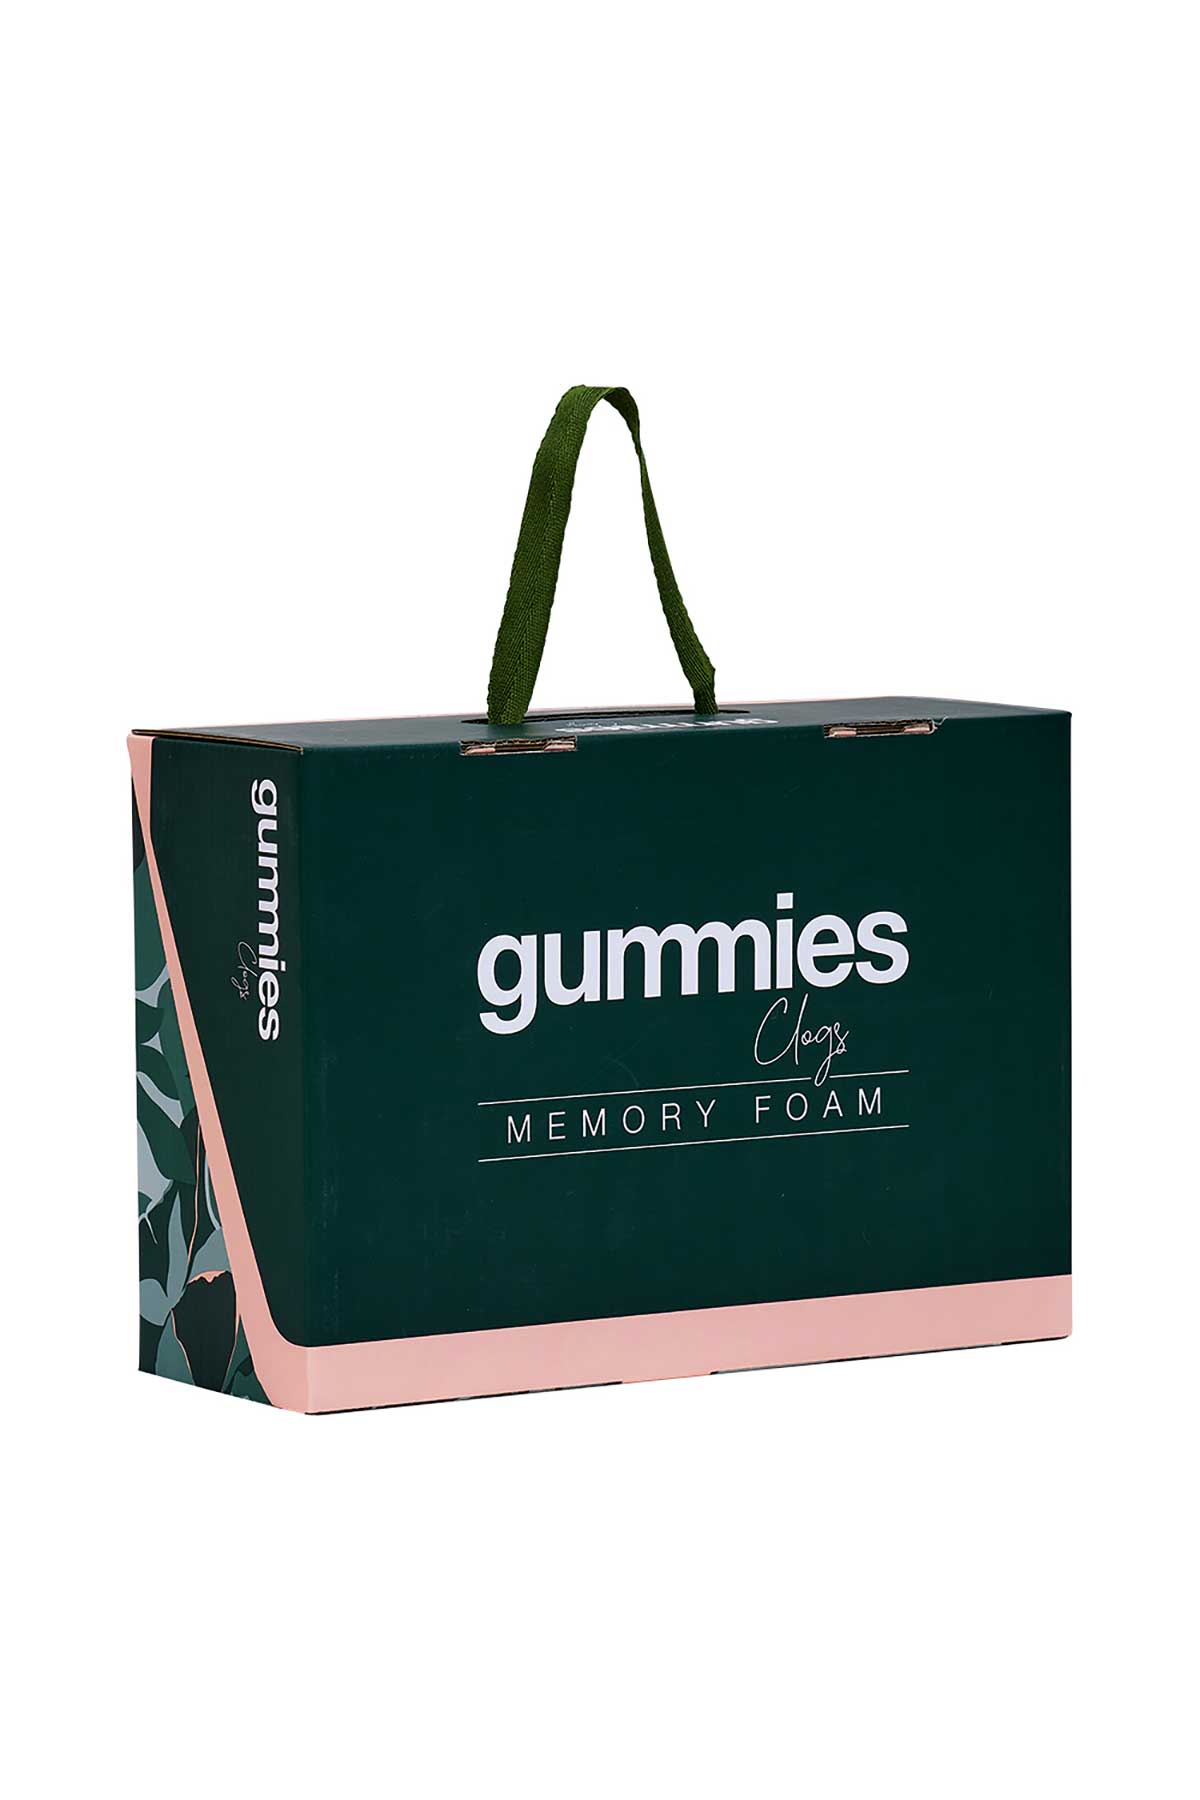 Annabel Trends Gummies Clog in box